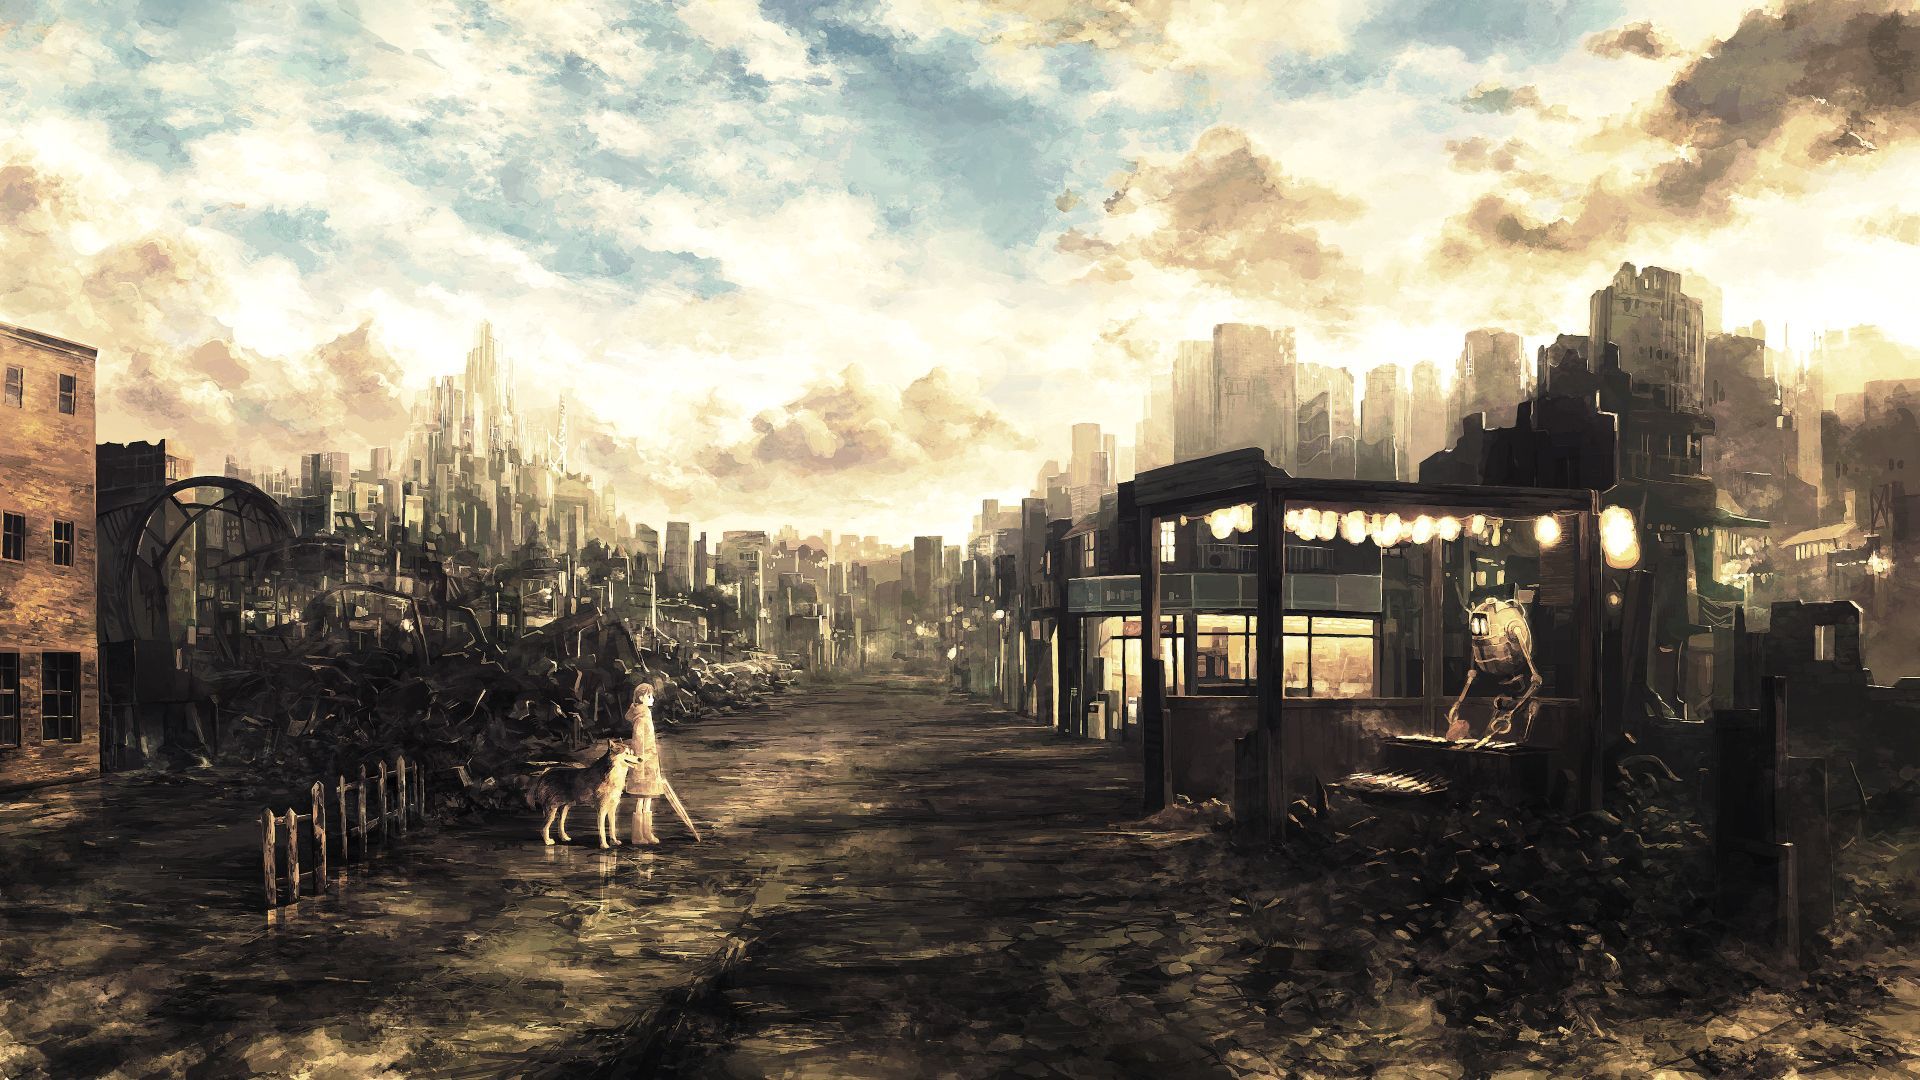 Anime scenery wallpaper, Anime scenery, Scenery wallpaper